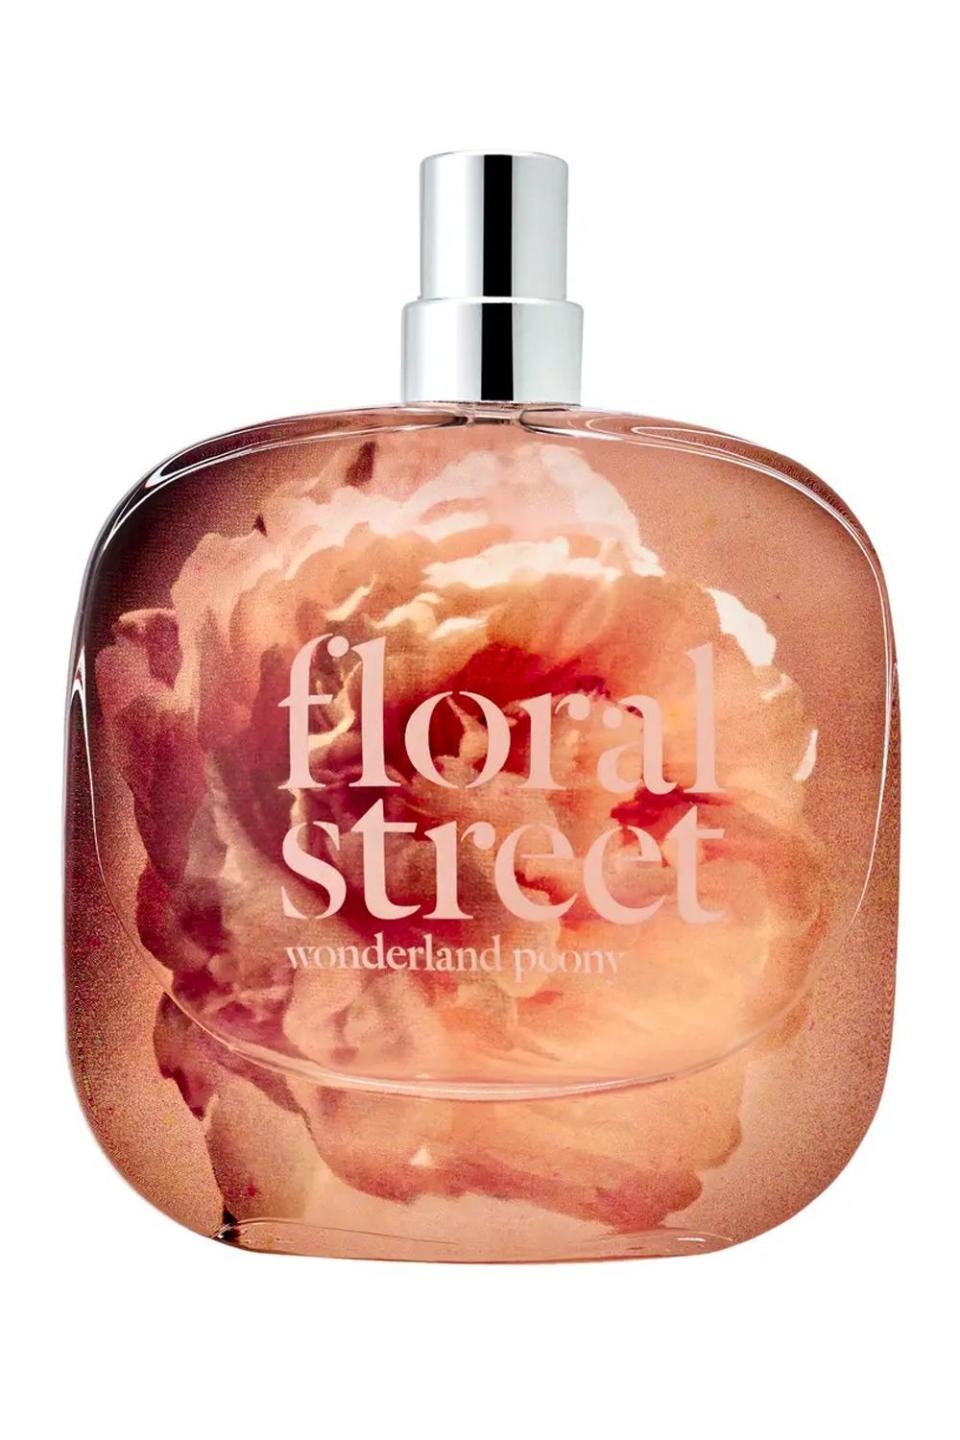 17) Floral Street Wonderland Peony Eau De Parfum